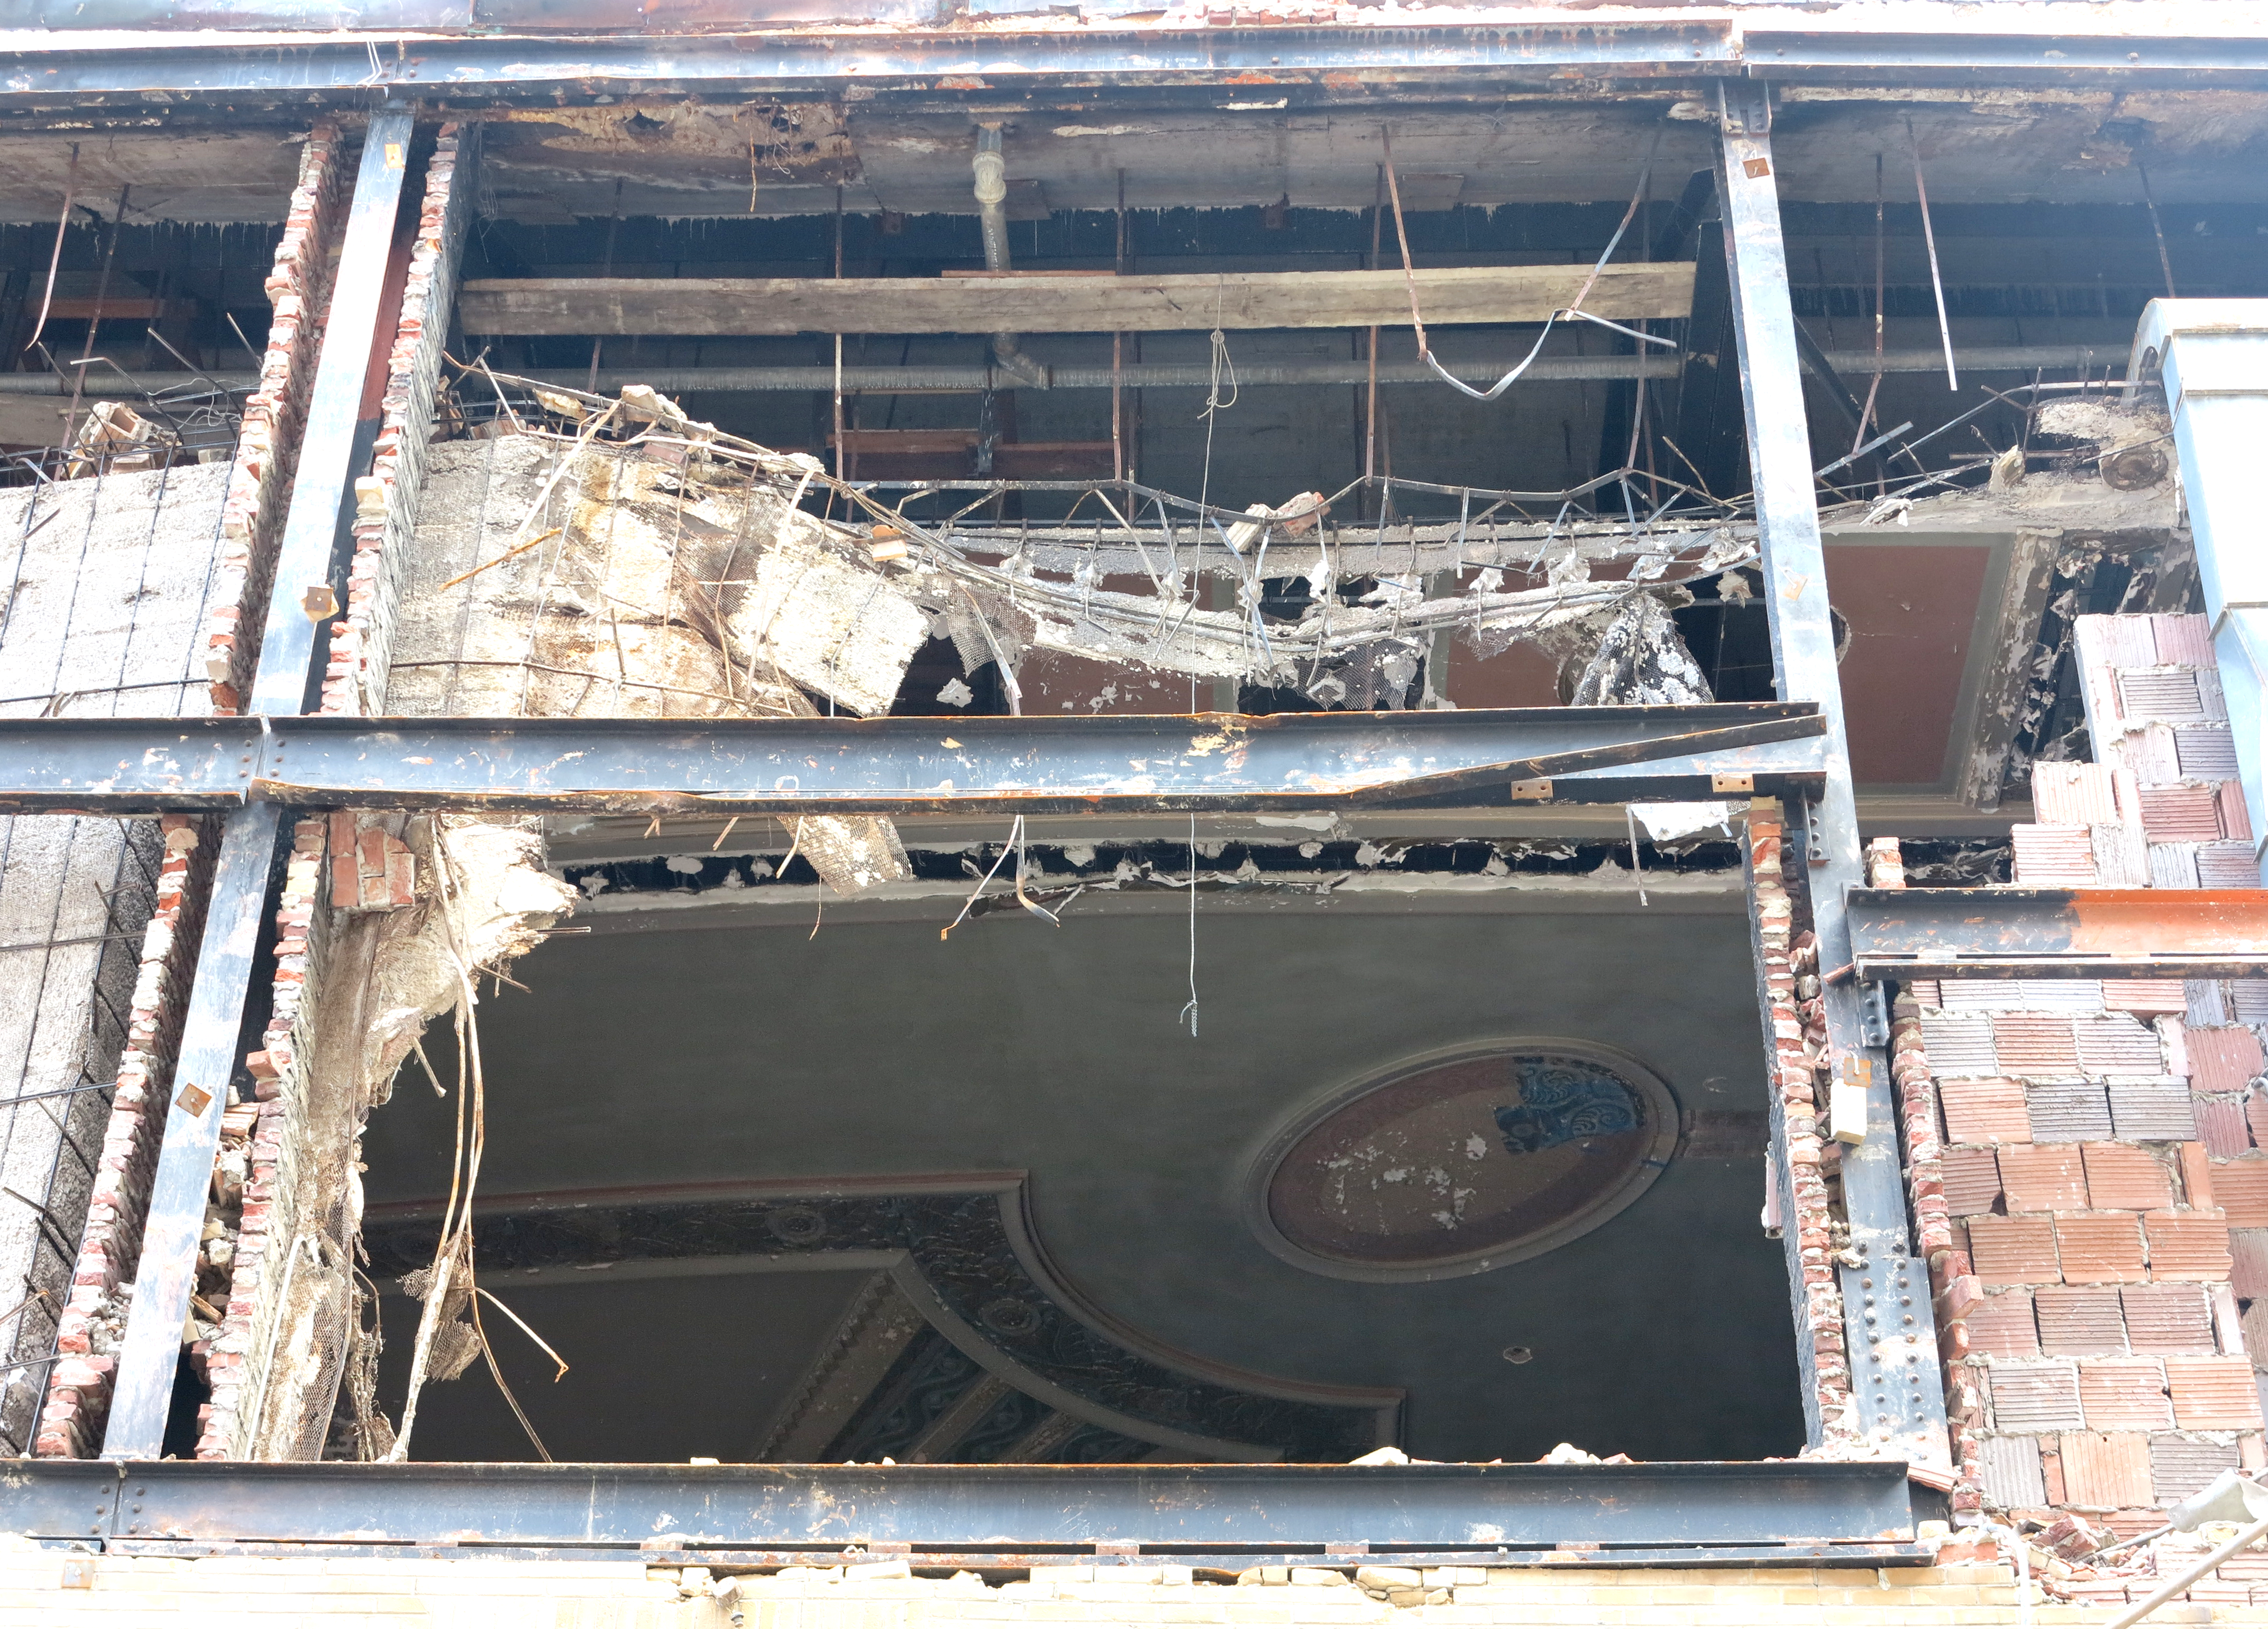 Demolition revealing the Boyd's auditorium